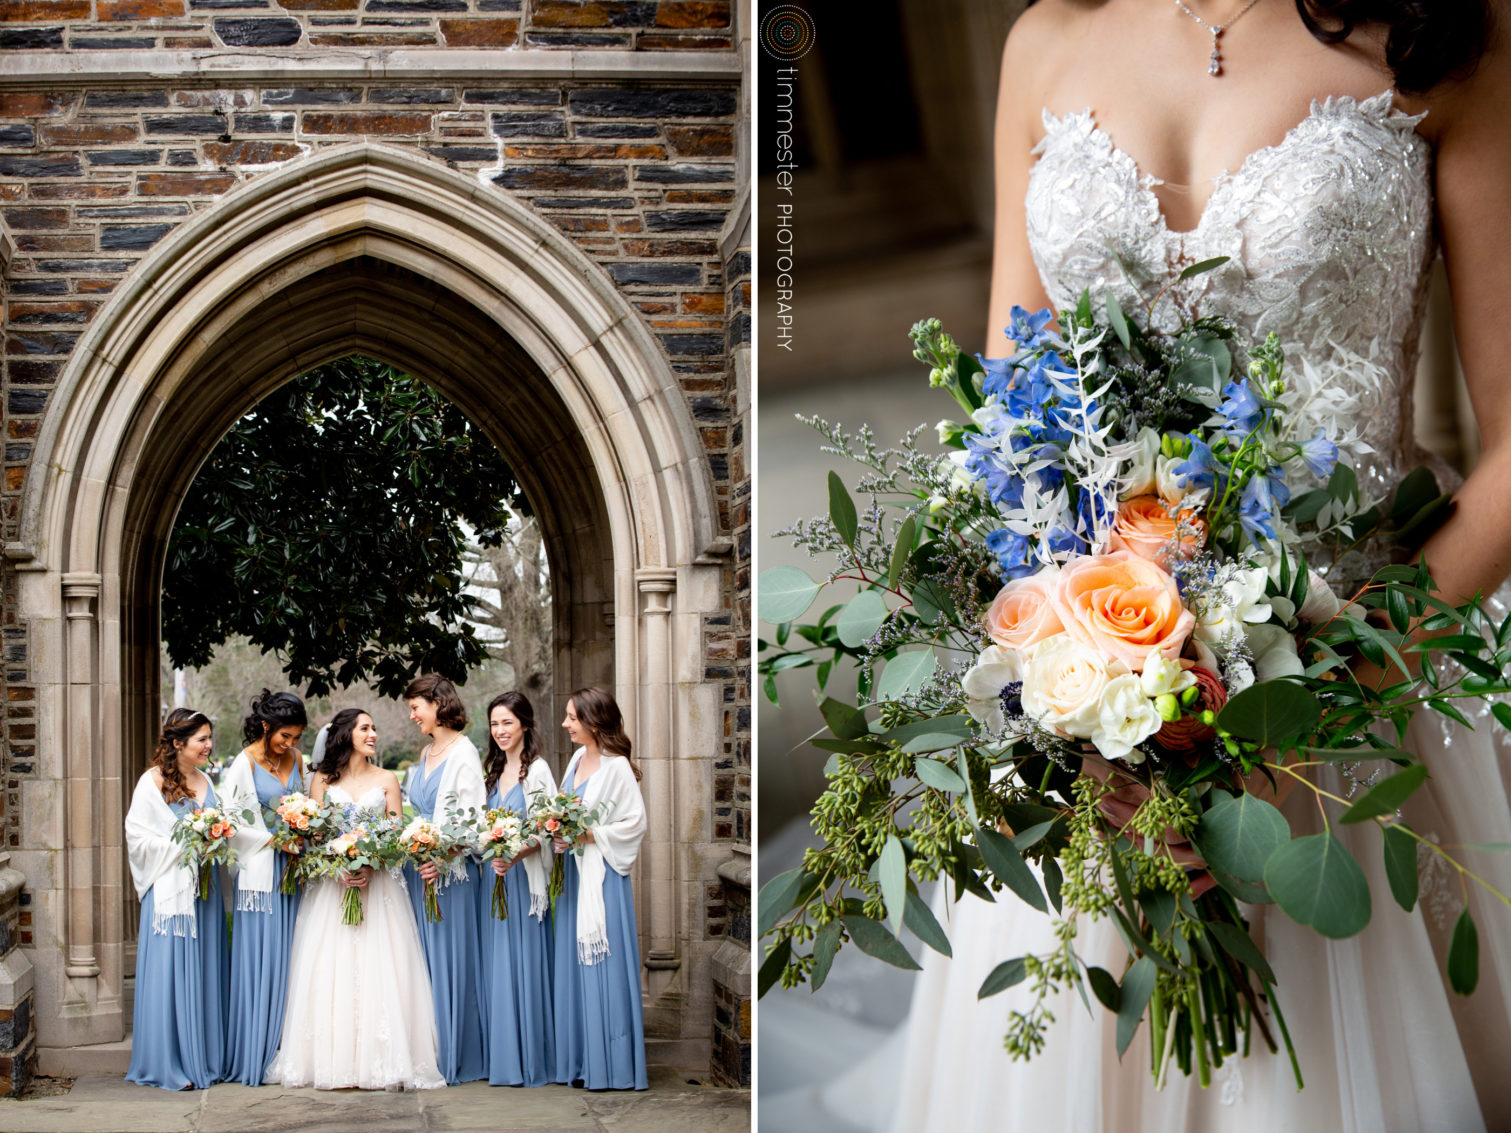 A bride and her bridesmaids at a Duke University Chapel wedding in North Carolina